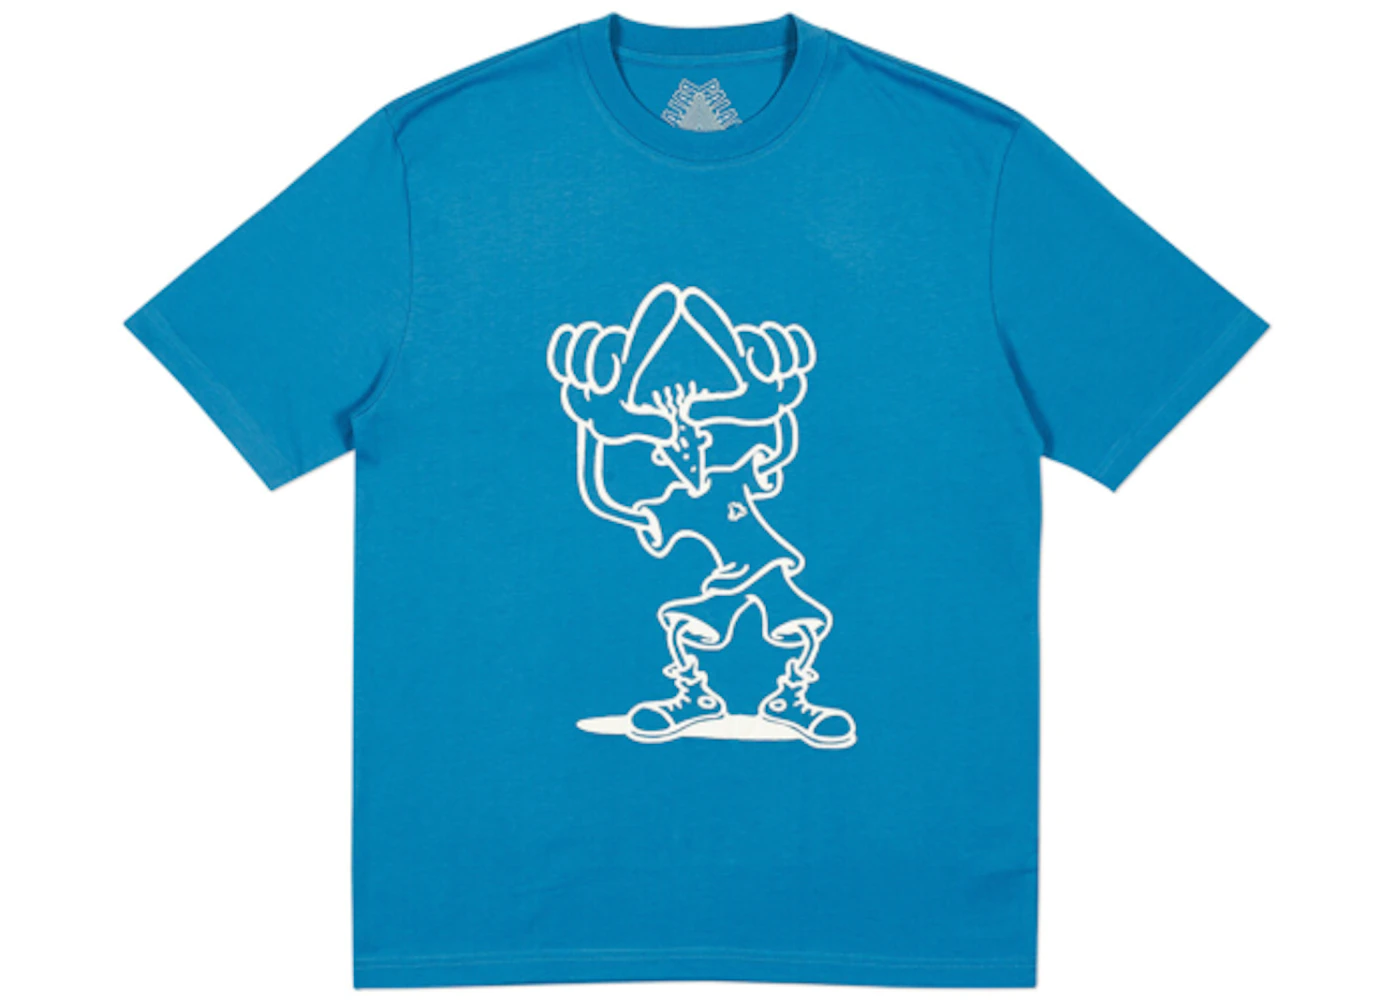 Palace Fizzy T-Shirt Blue - FW18 Men's - US